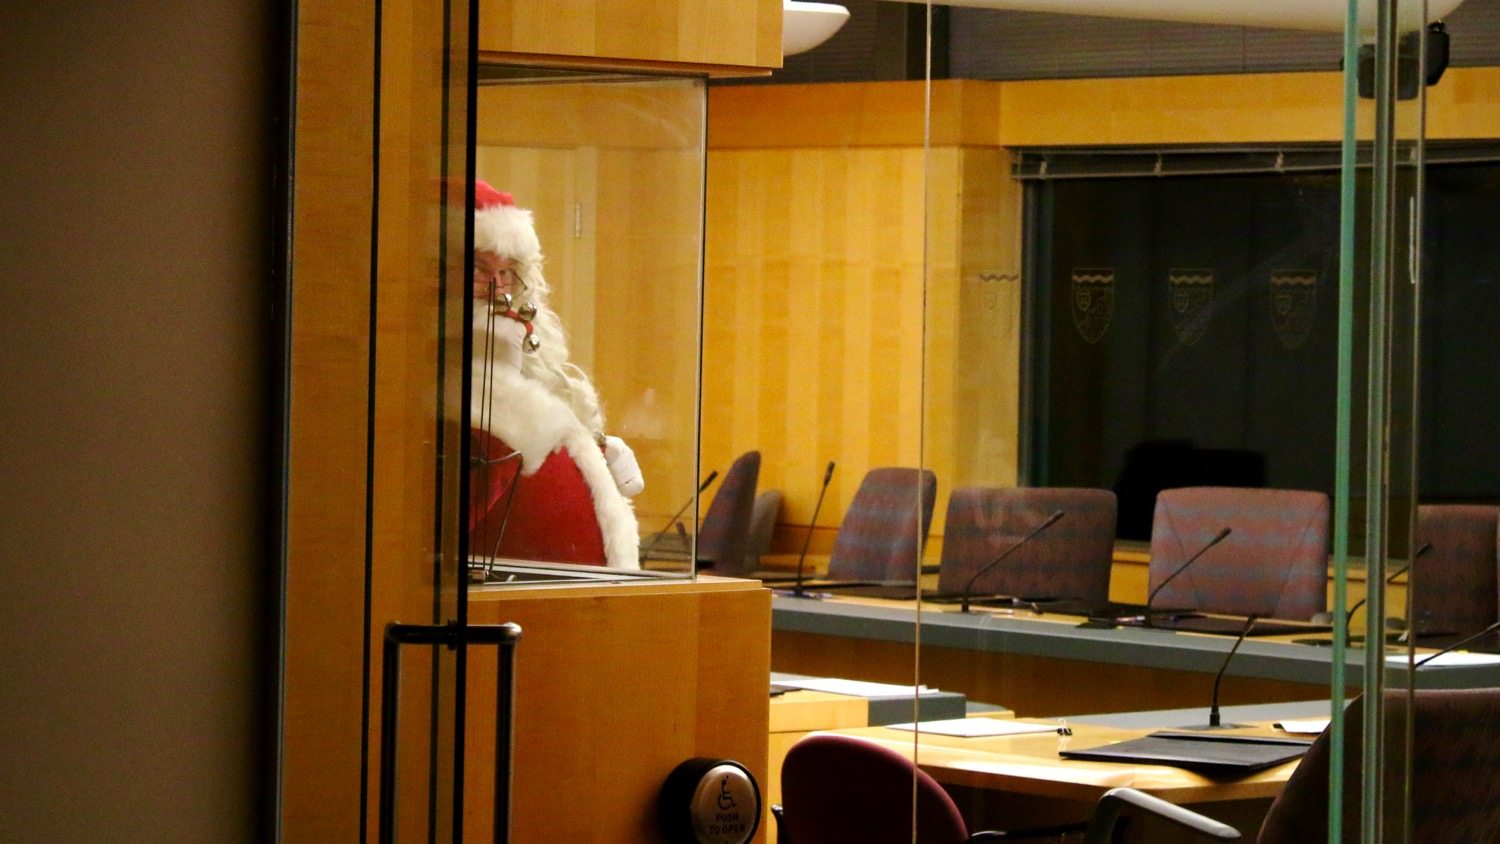 Legislative Assembly turns on Christmas lights